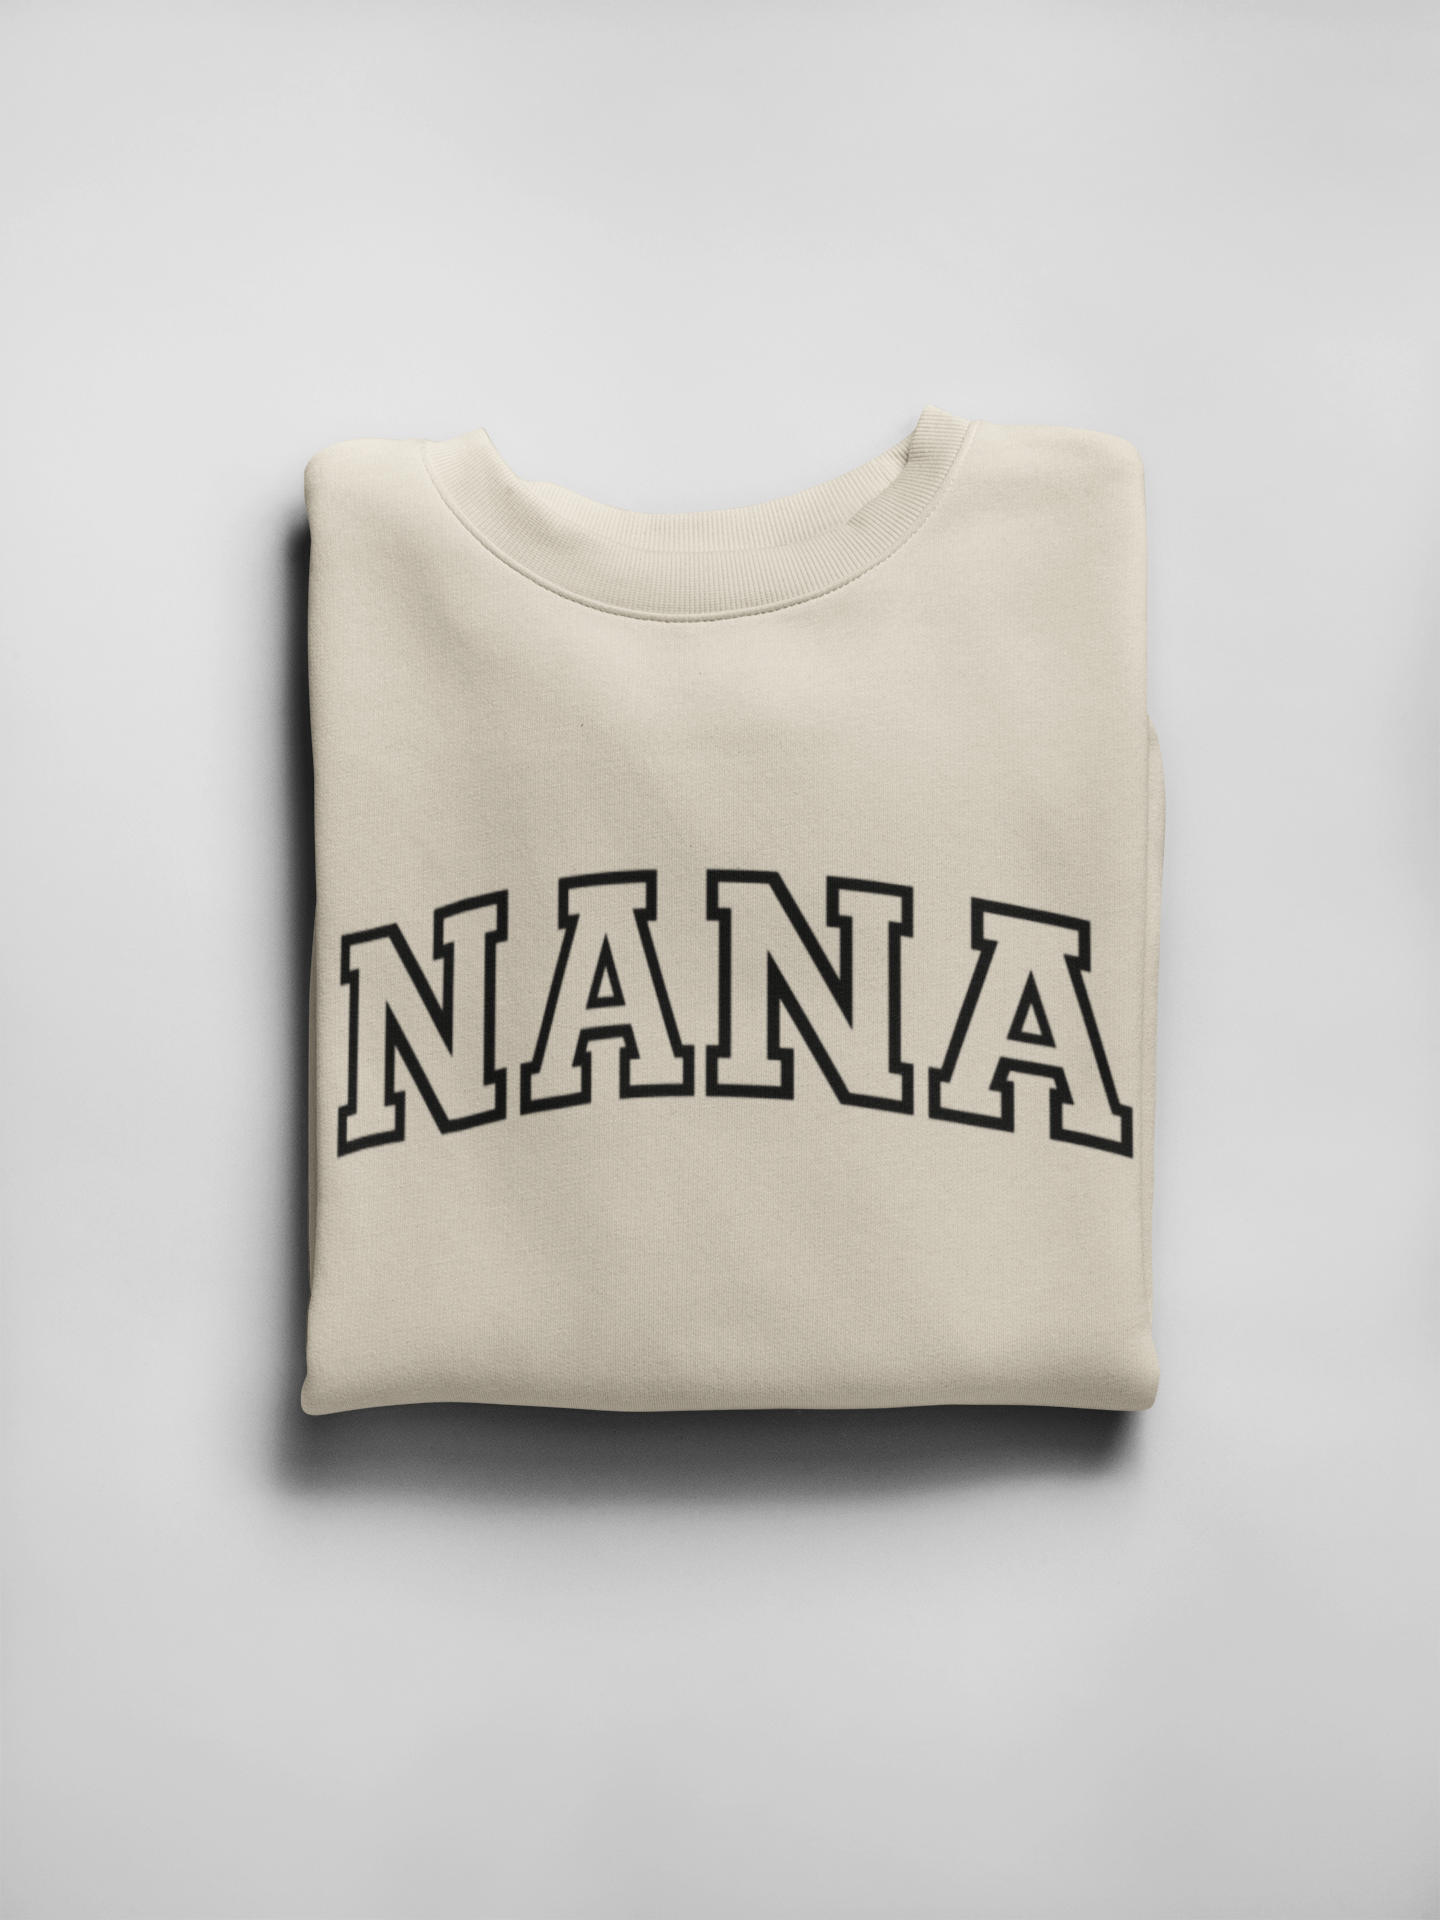 Varsity Nana-Crewneck Sweatshirt